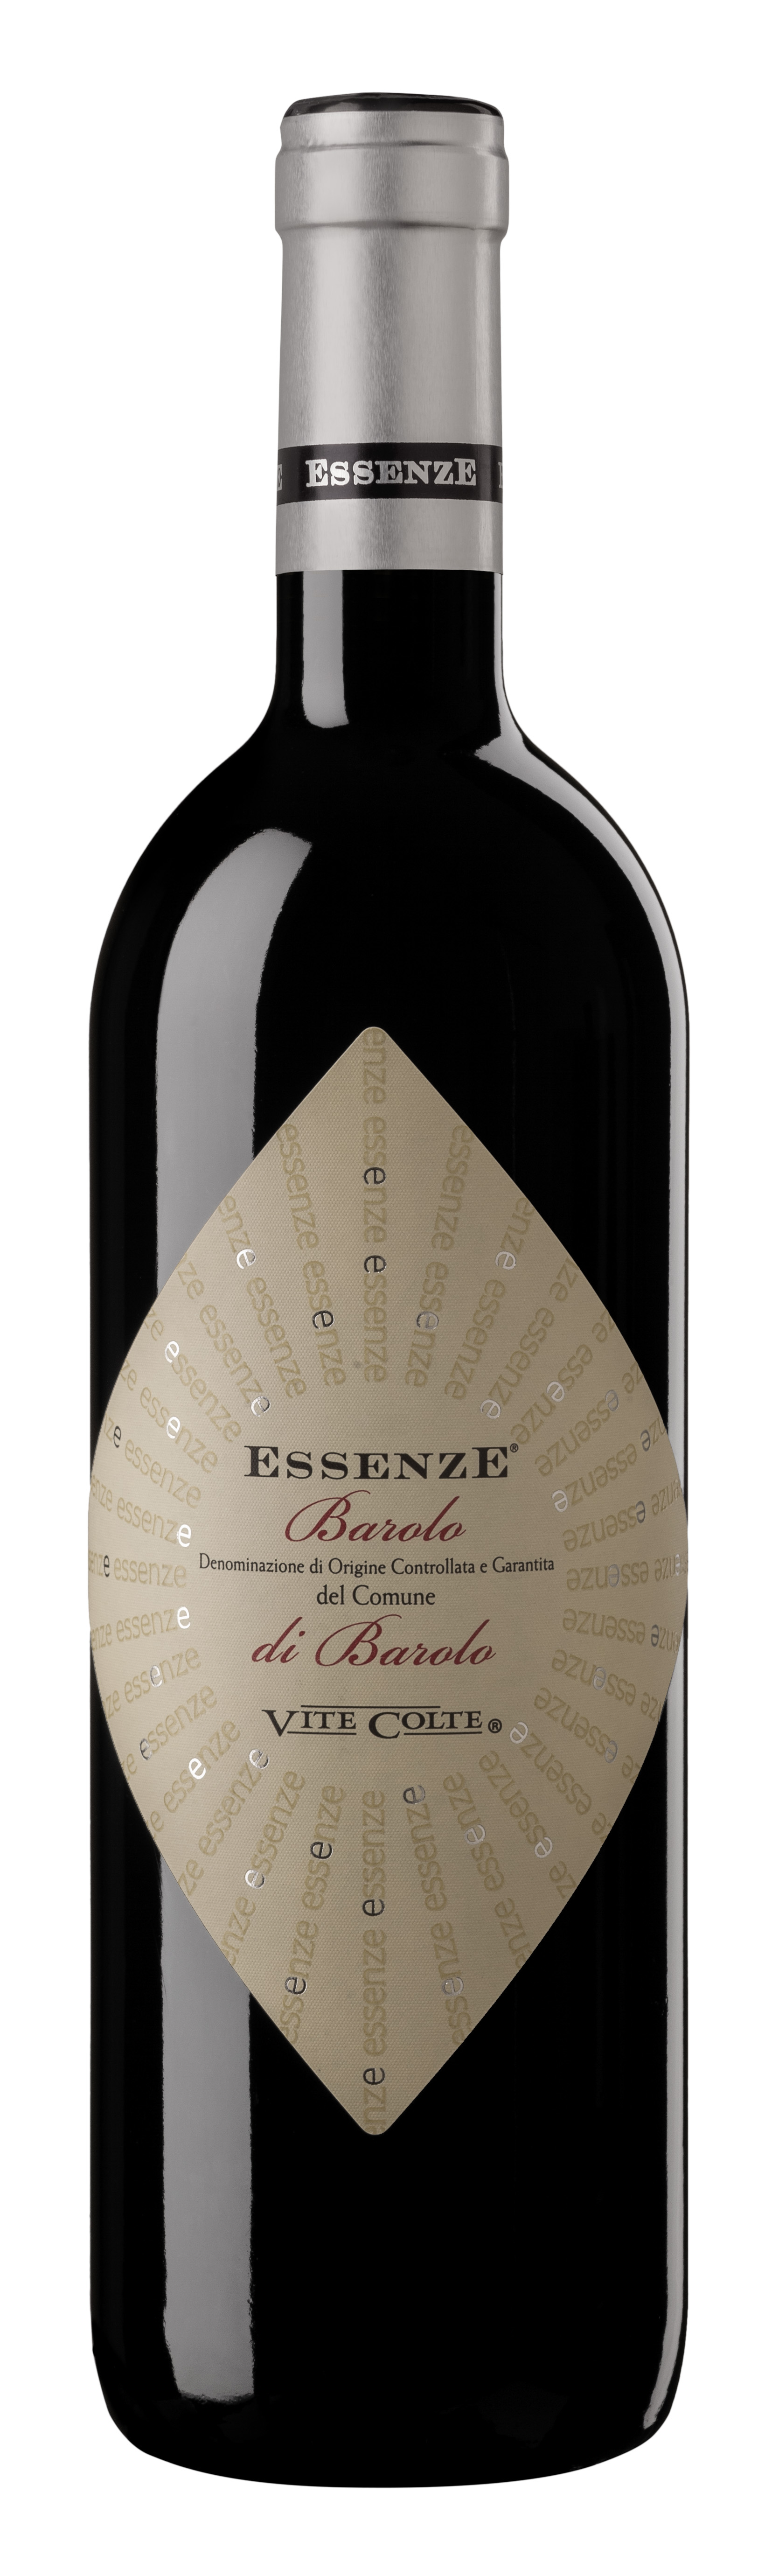 2012 Barolo "Essenze" DOCG 0.75l